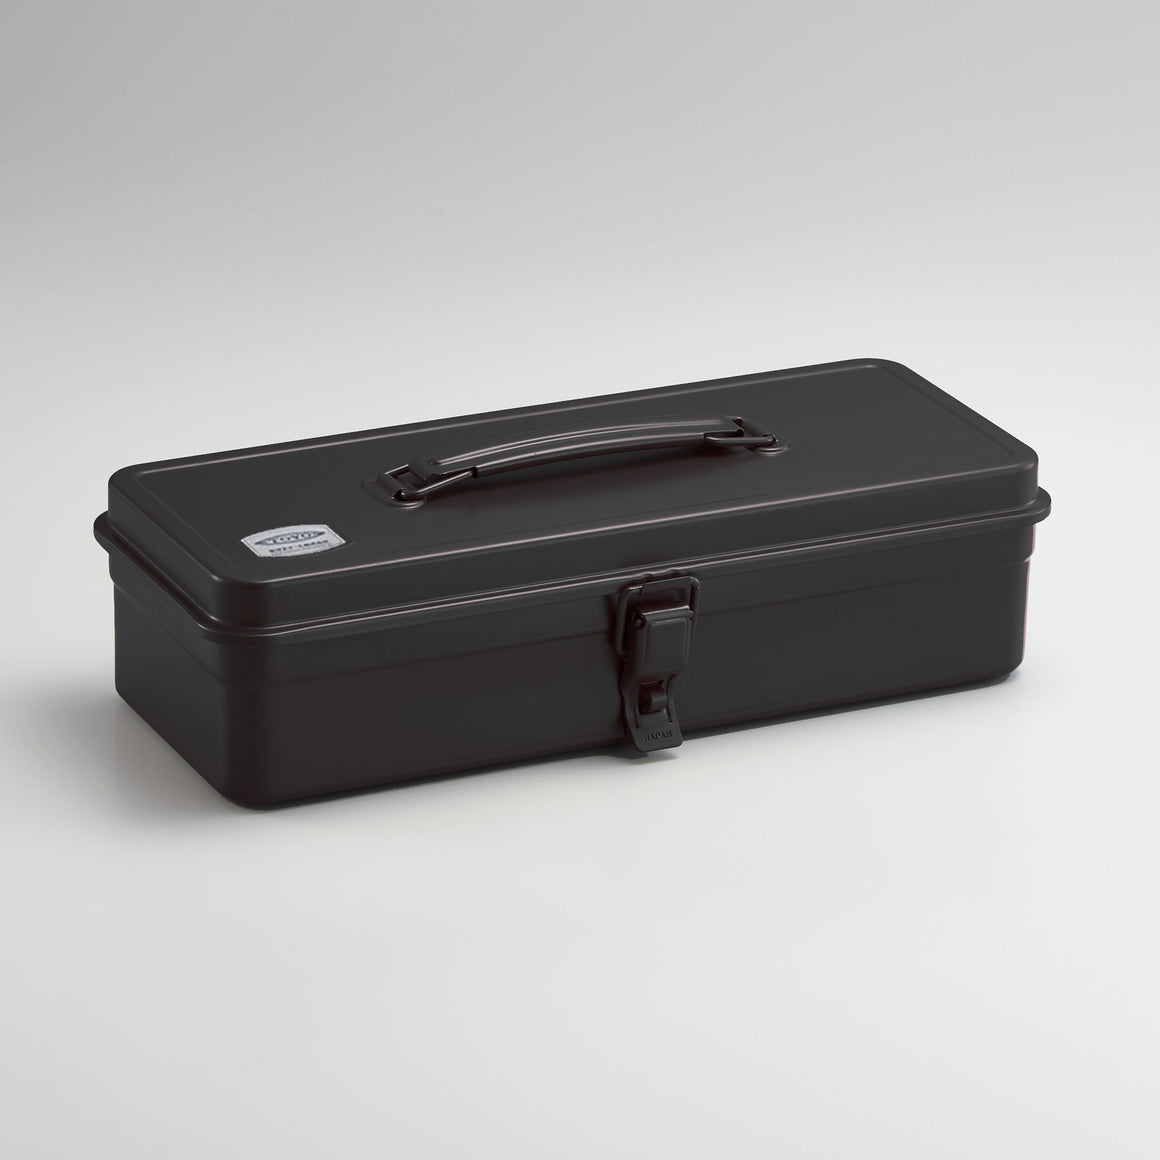 Toyo T-320 Metal Toolbox Storage Case - Black